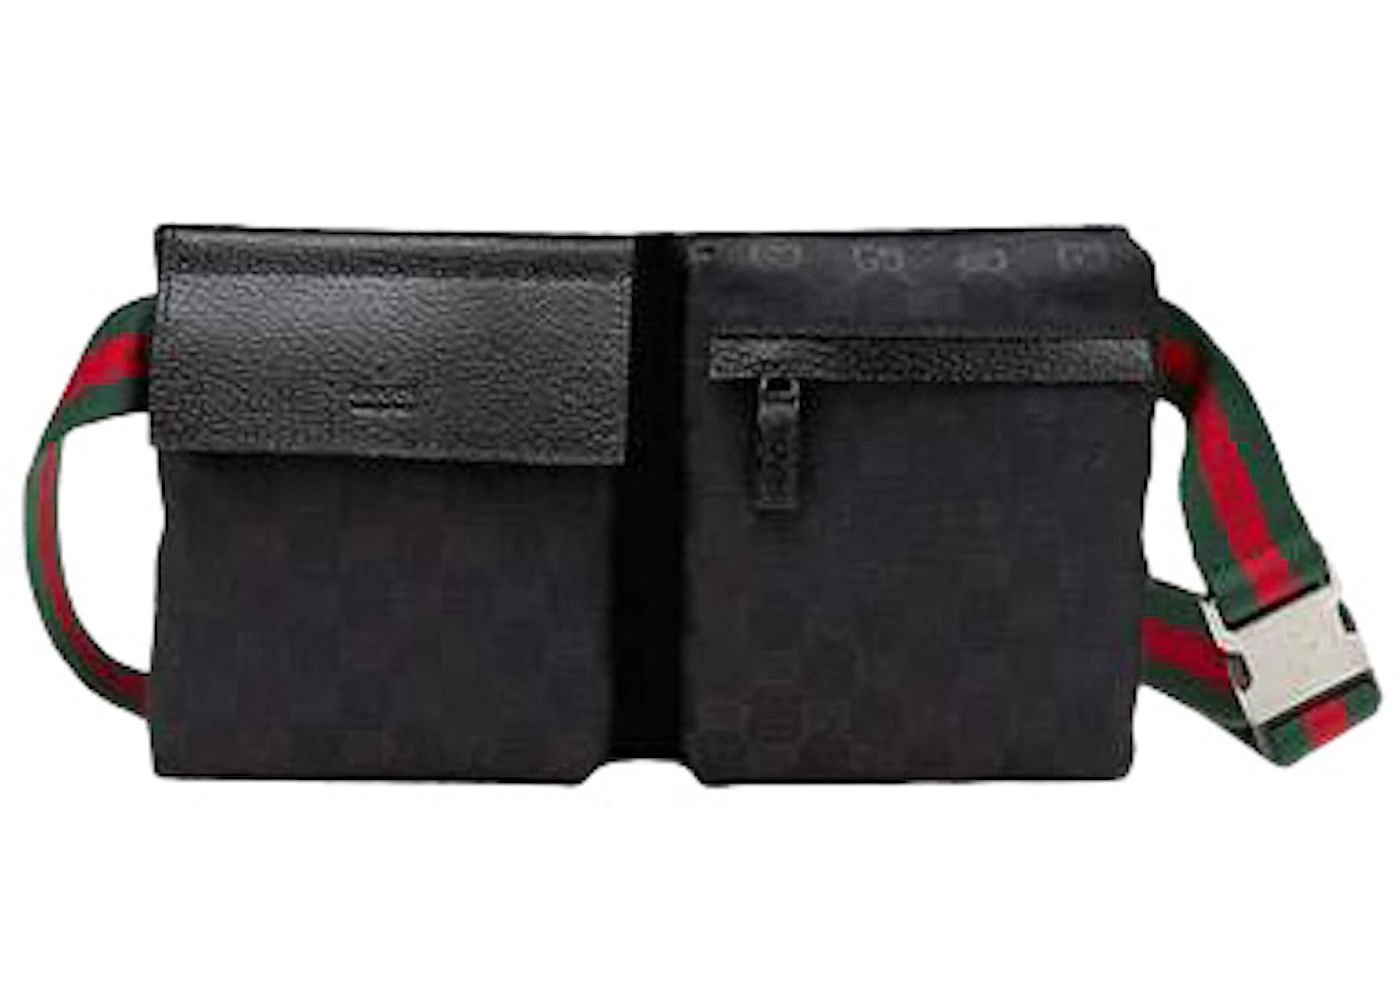 Gucci Flap Belt Bag GG Web Strap Black in Canvas/Leather/Polyamide